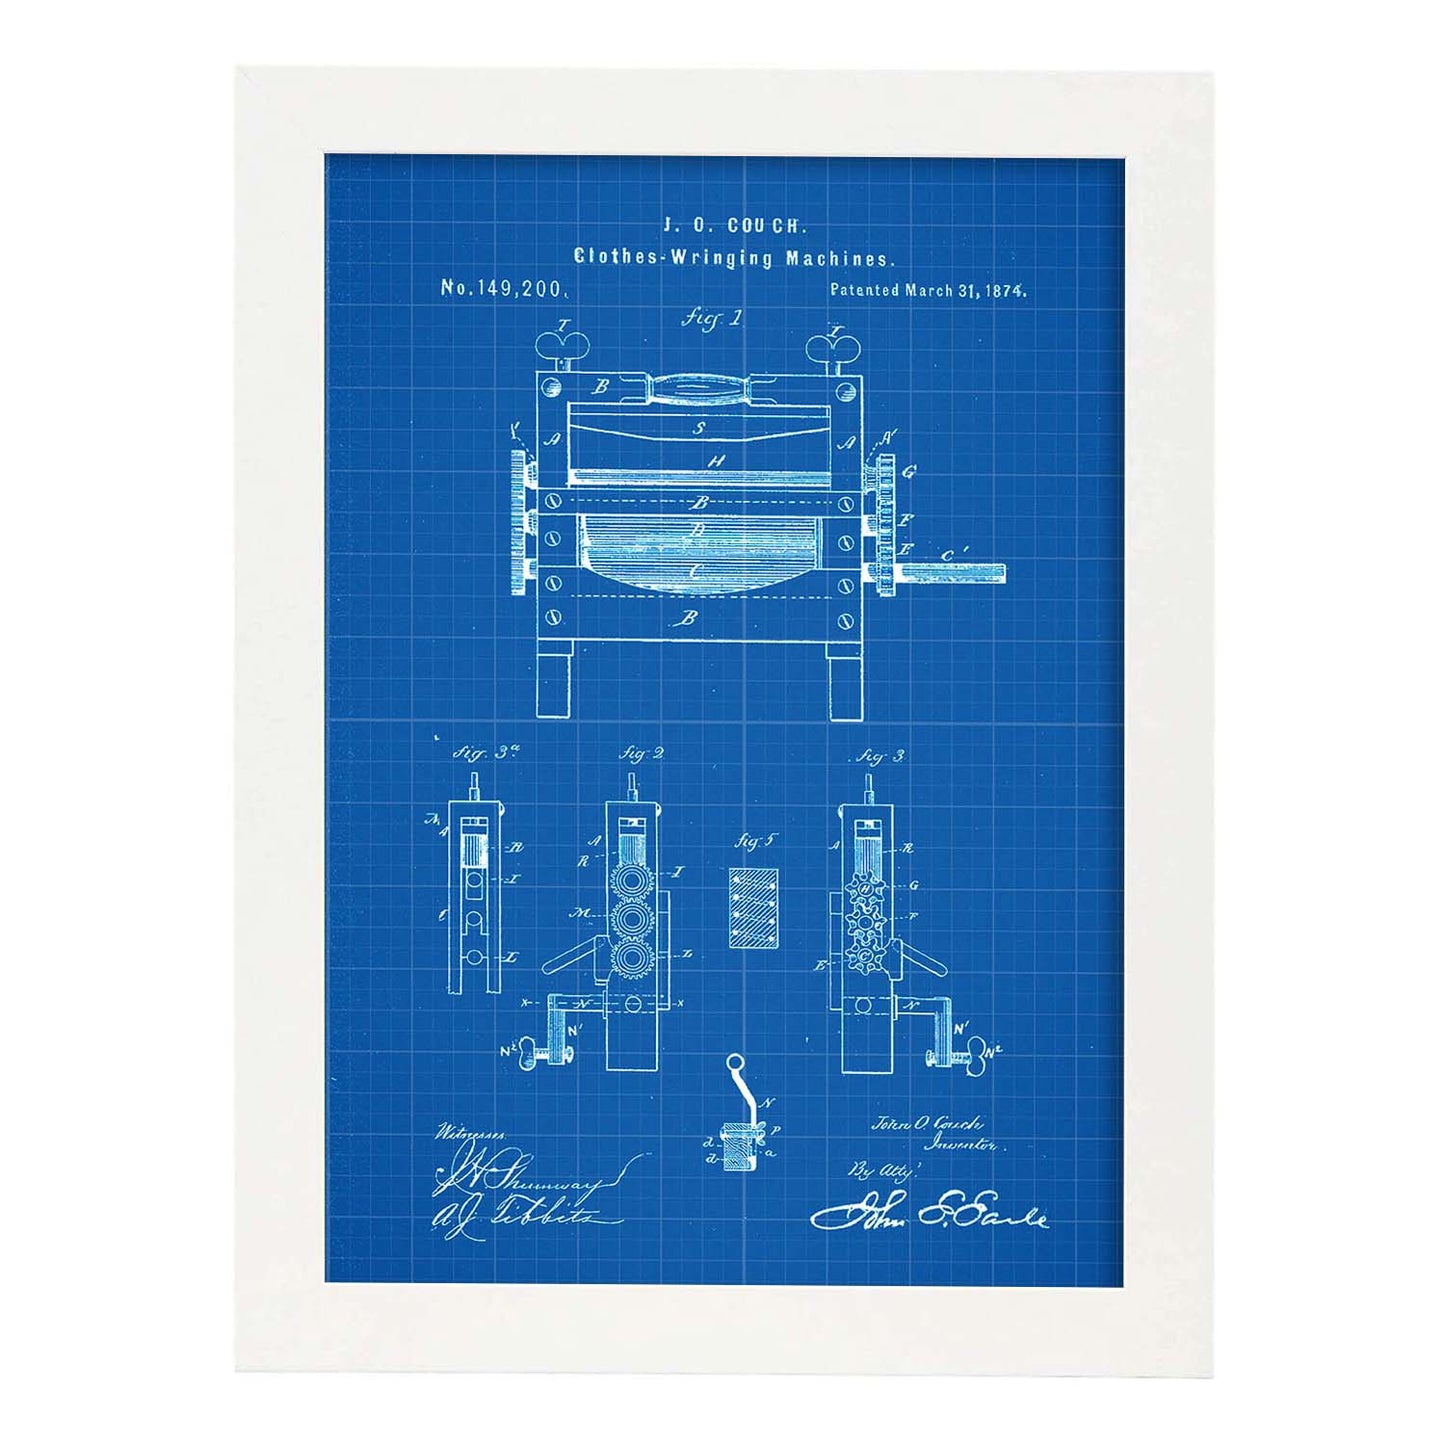 Poster con patente de Prensadora de ropa. Lámina con diseño de patente antigua-Artwork-Nacnic-A3-Marco Blanco-Nacnic Estudio SL